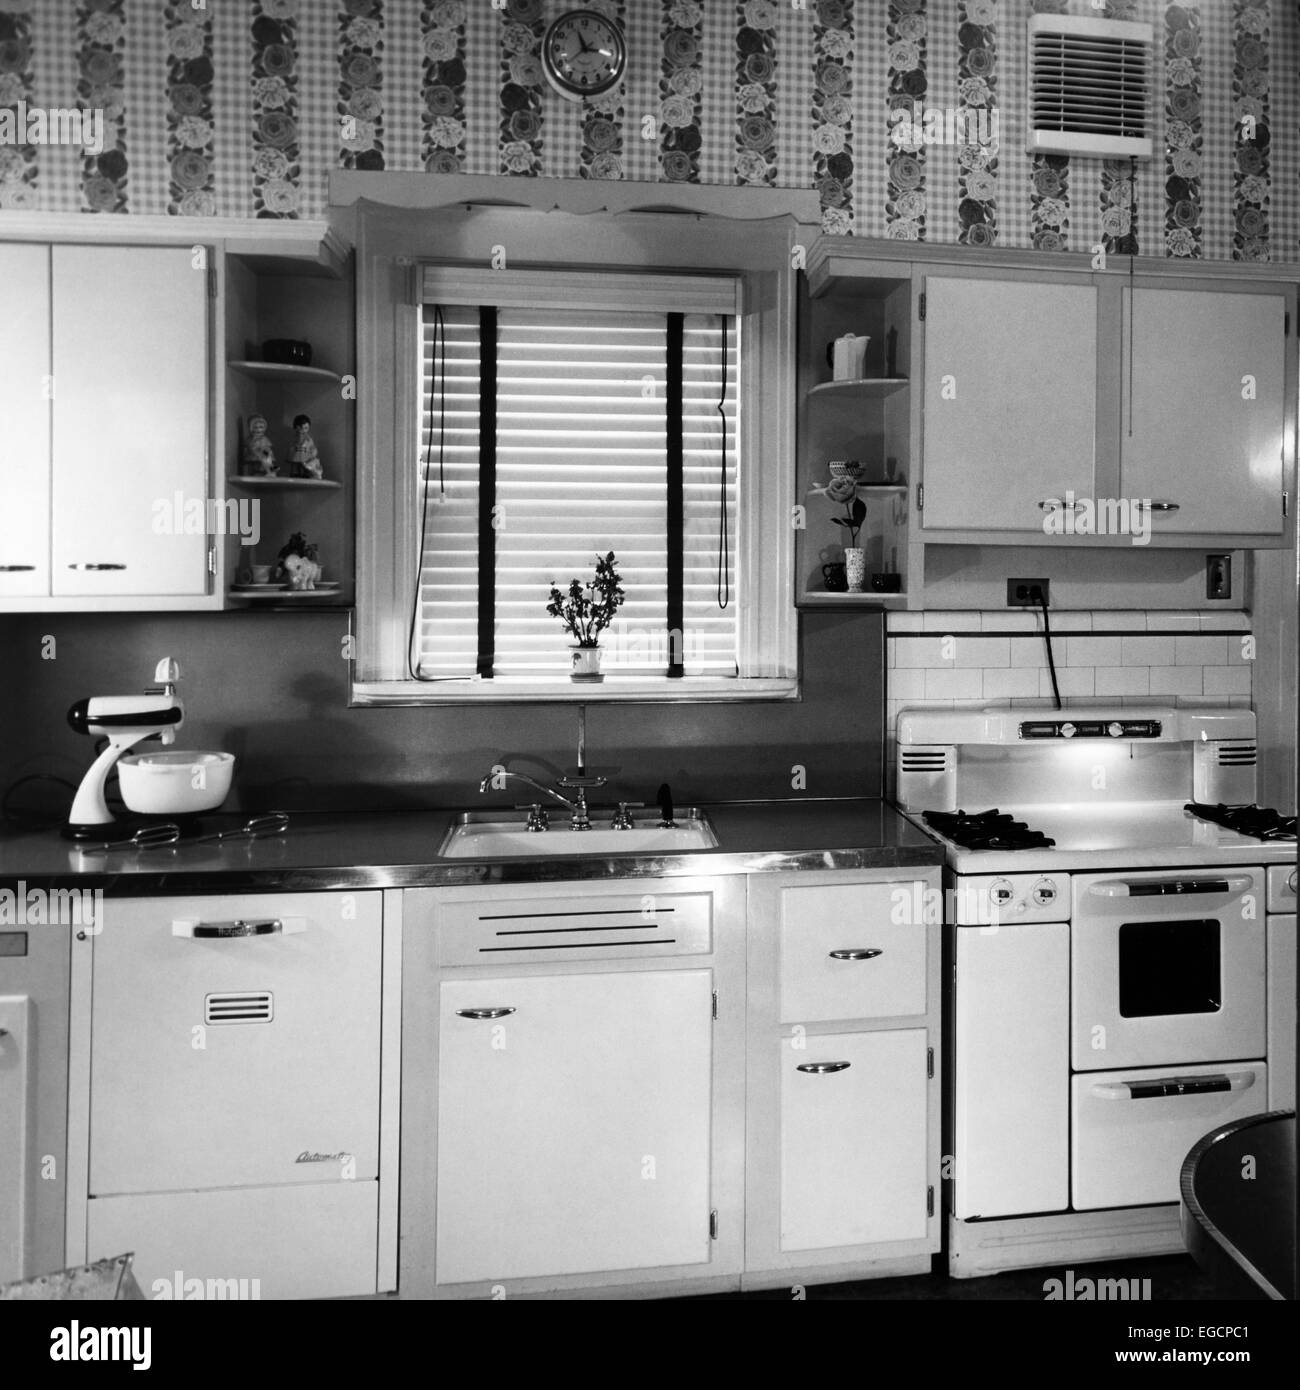 1950s MODERN KITCHEN INTERIOR SINK AND STOVE Stock Photo